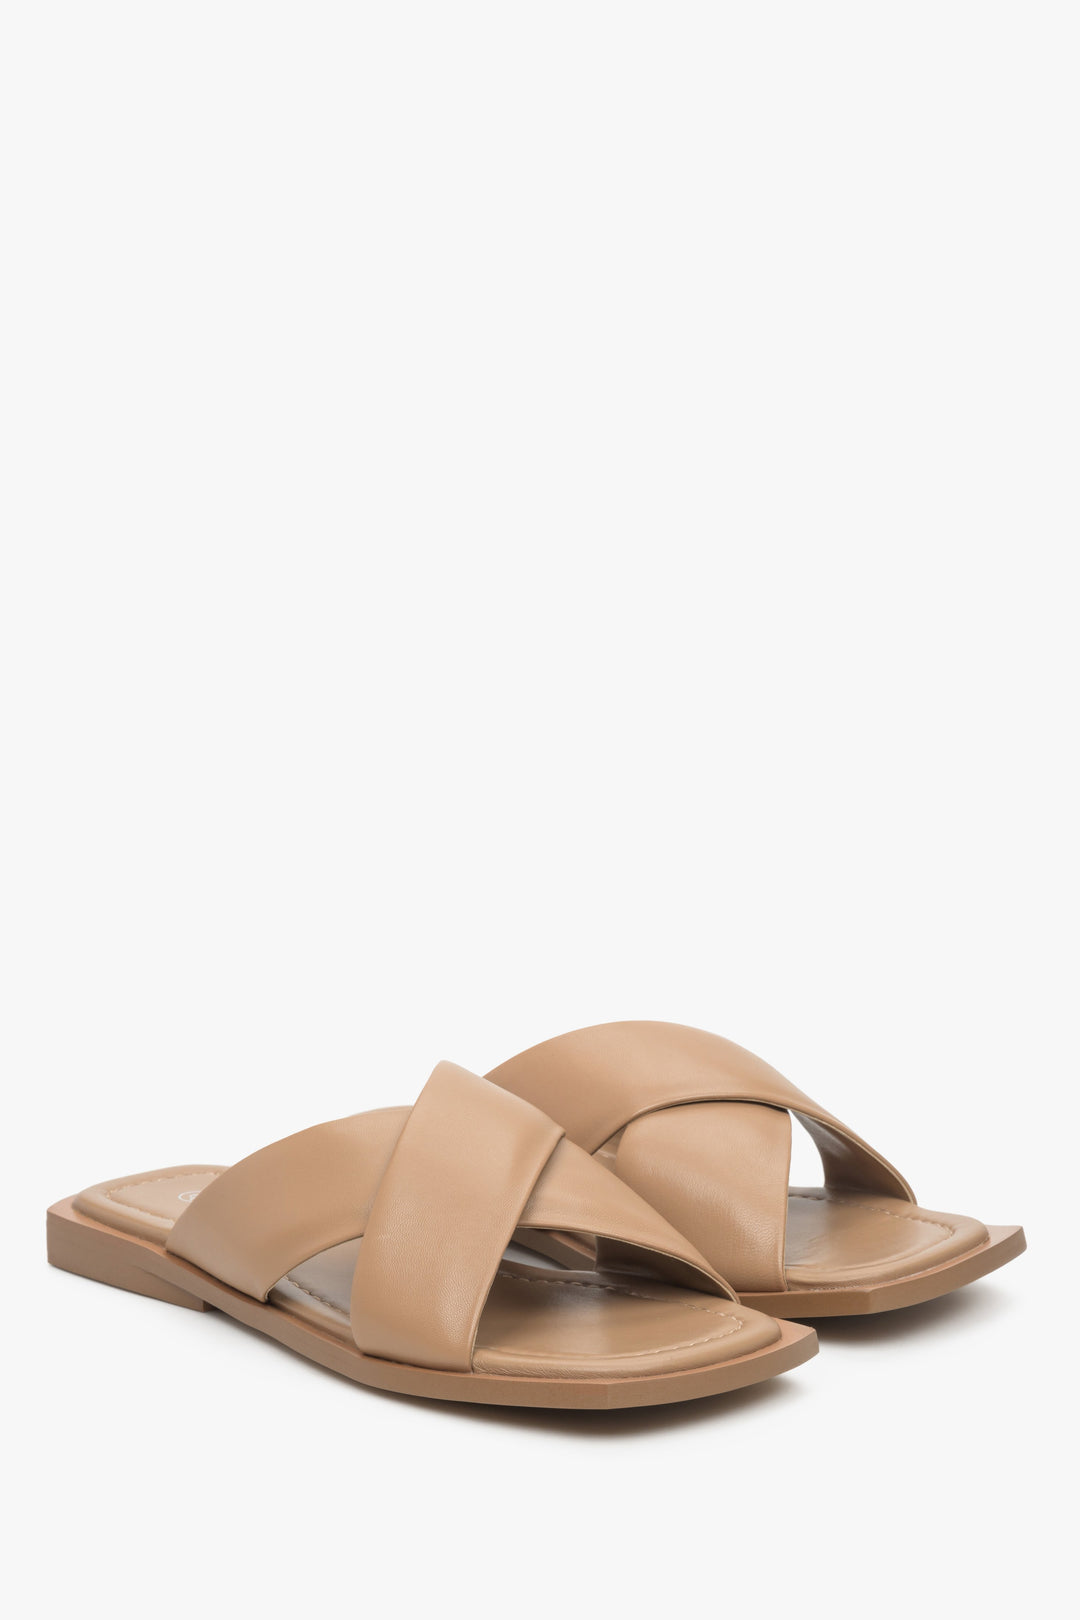 Women's light brown flat slide sandals made of genuine leather, Estro brand.